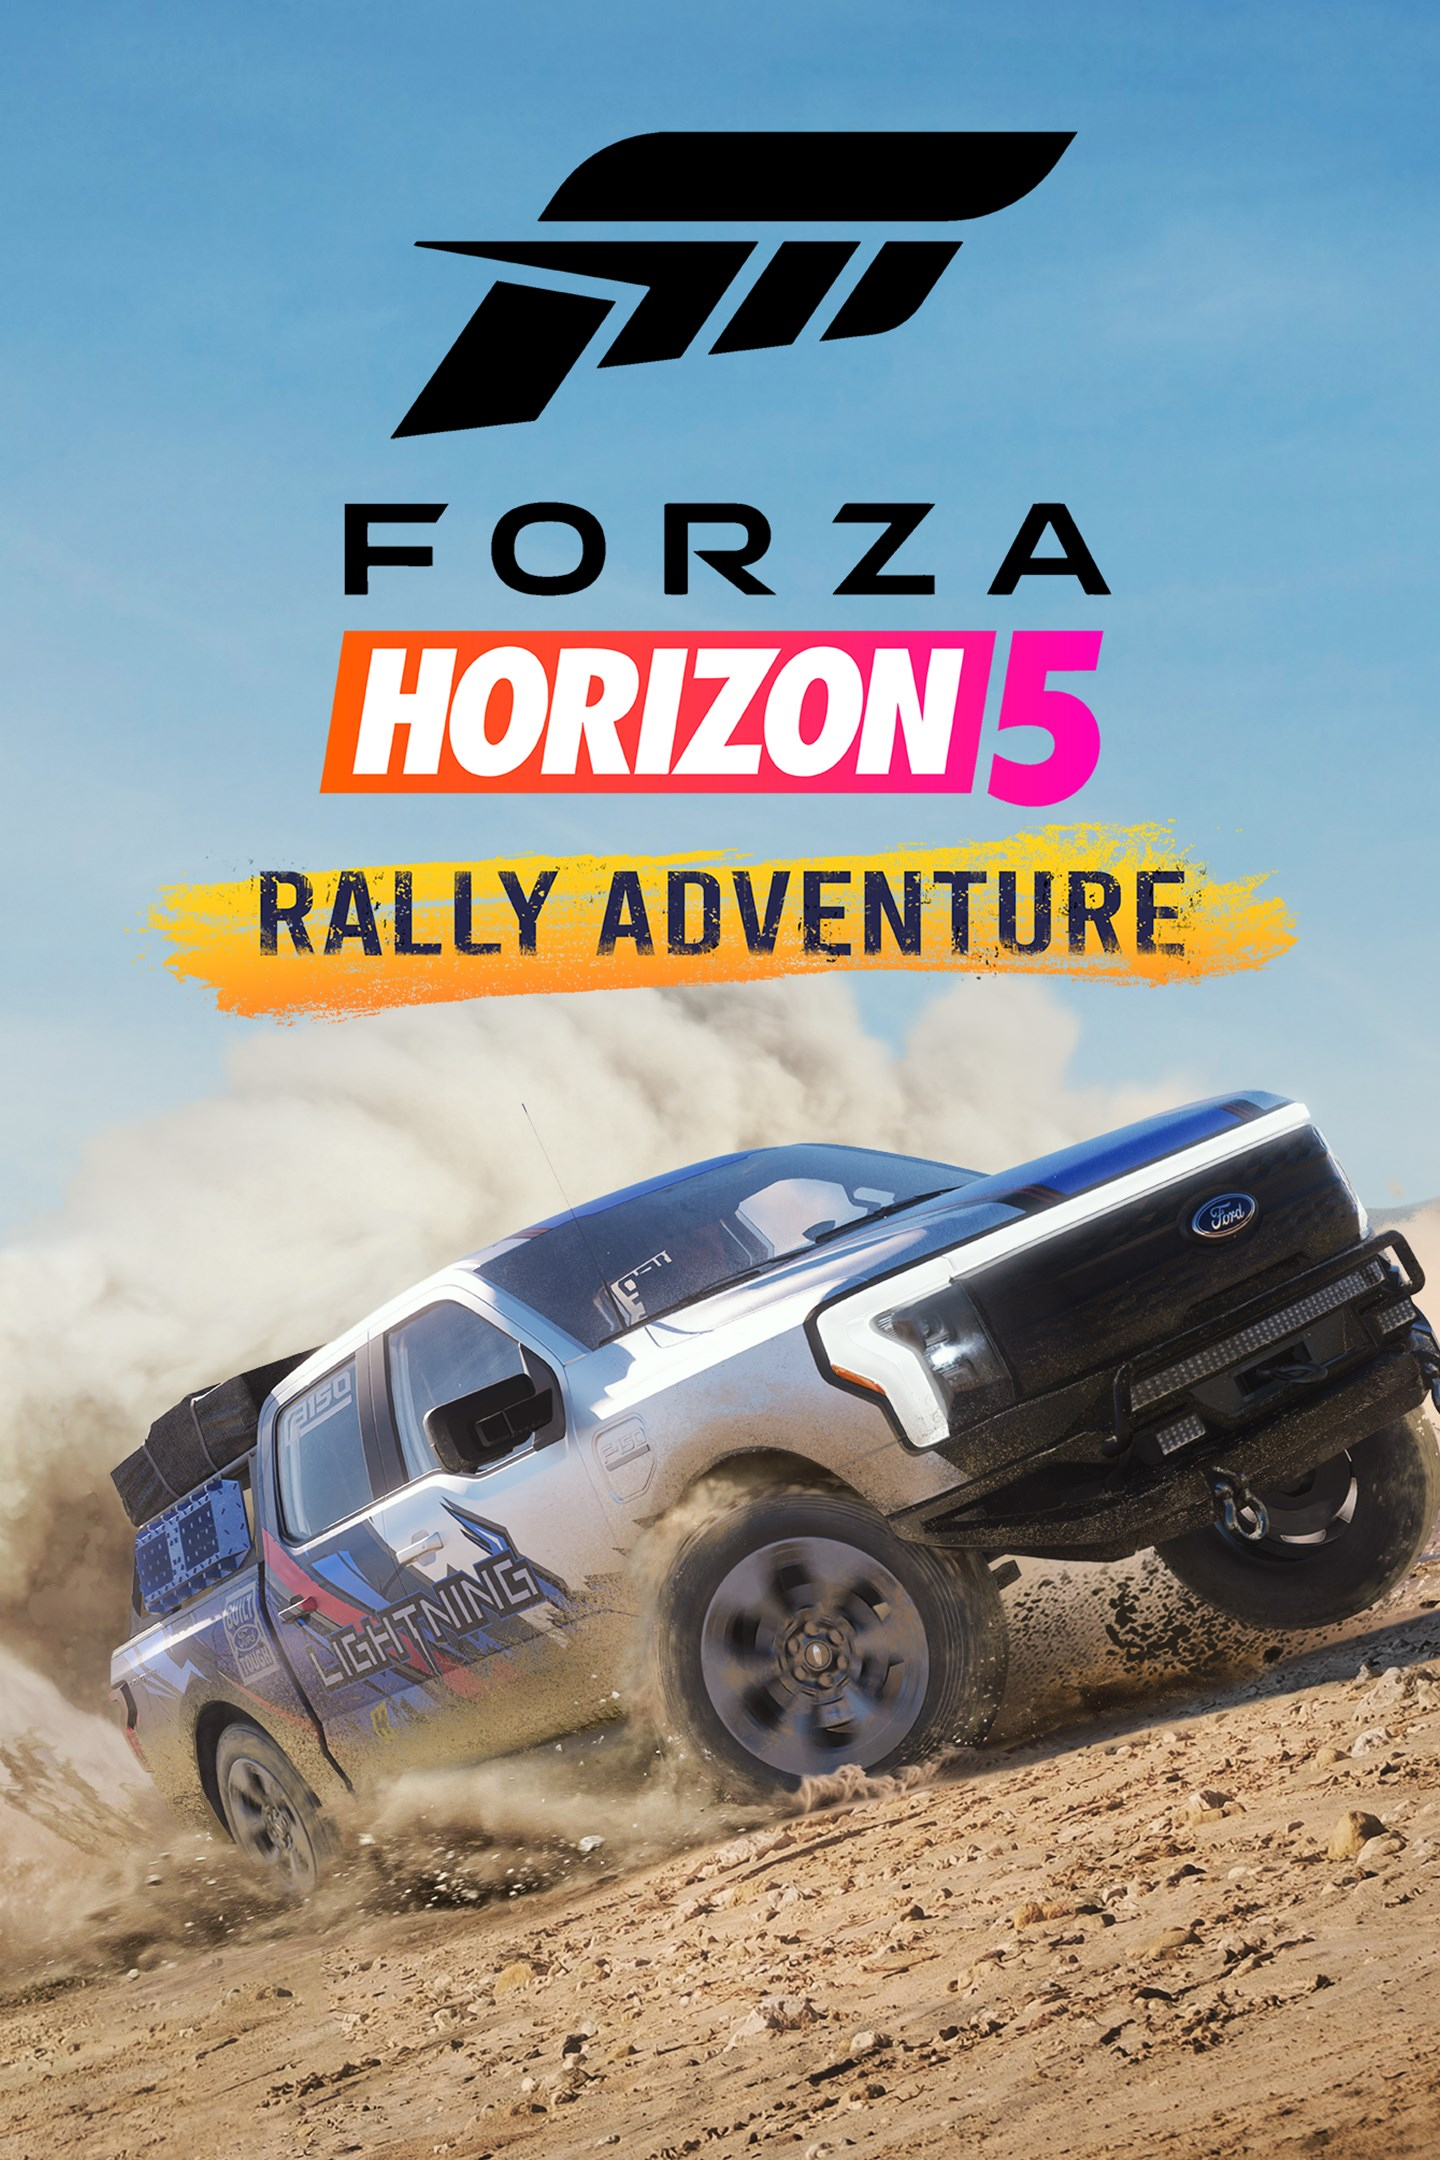 Steam Workshop::[Vehicle Radio] Forza Horizon 1 Bass Arena